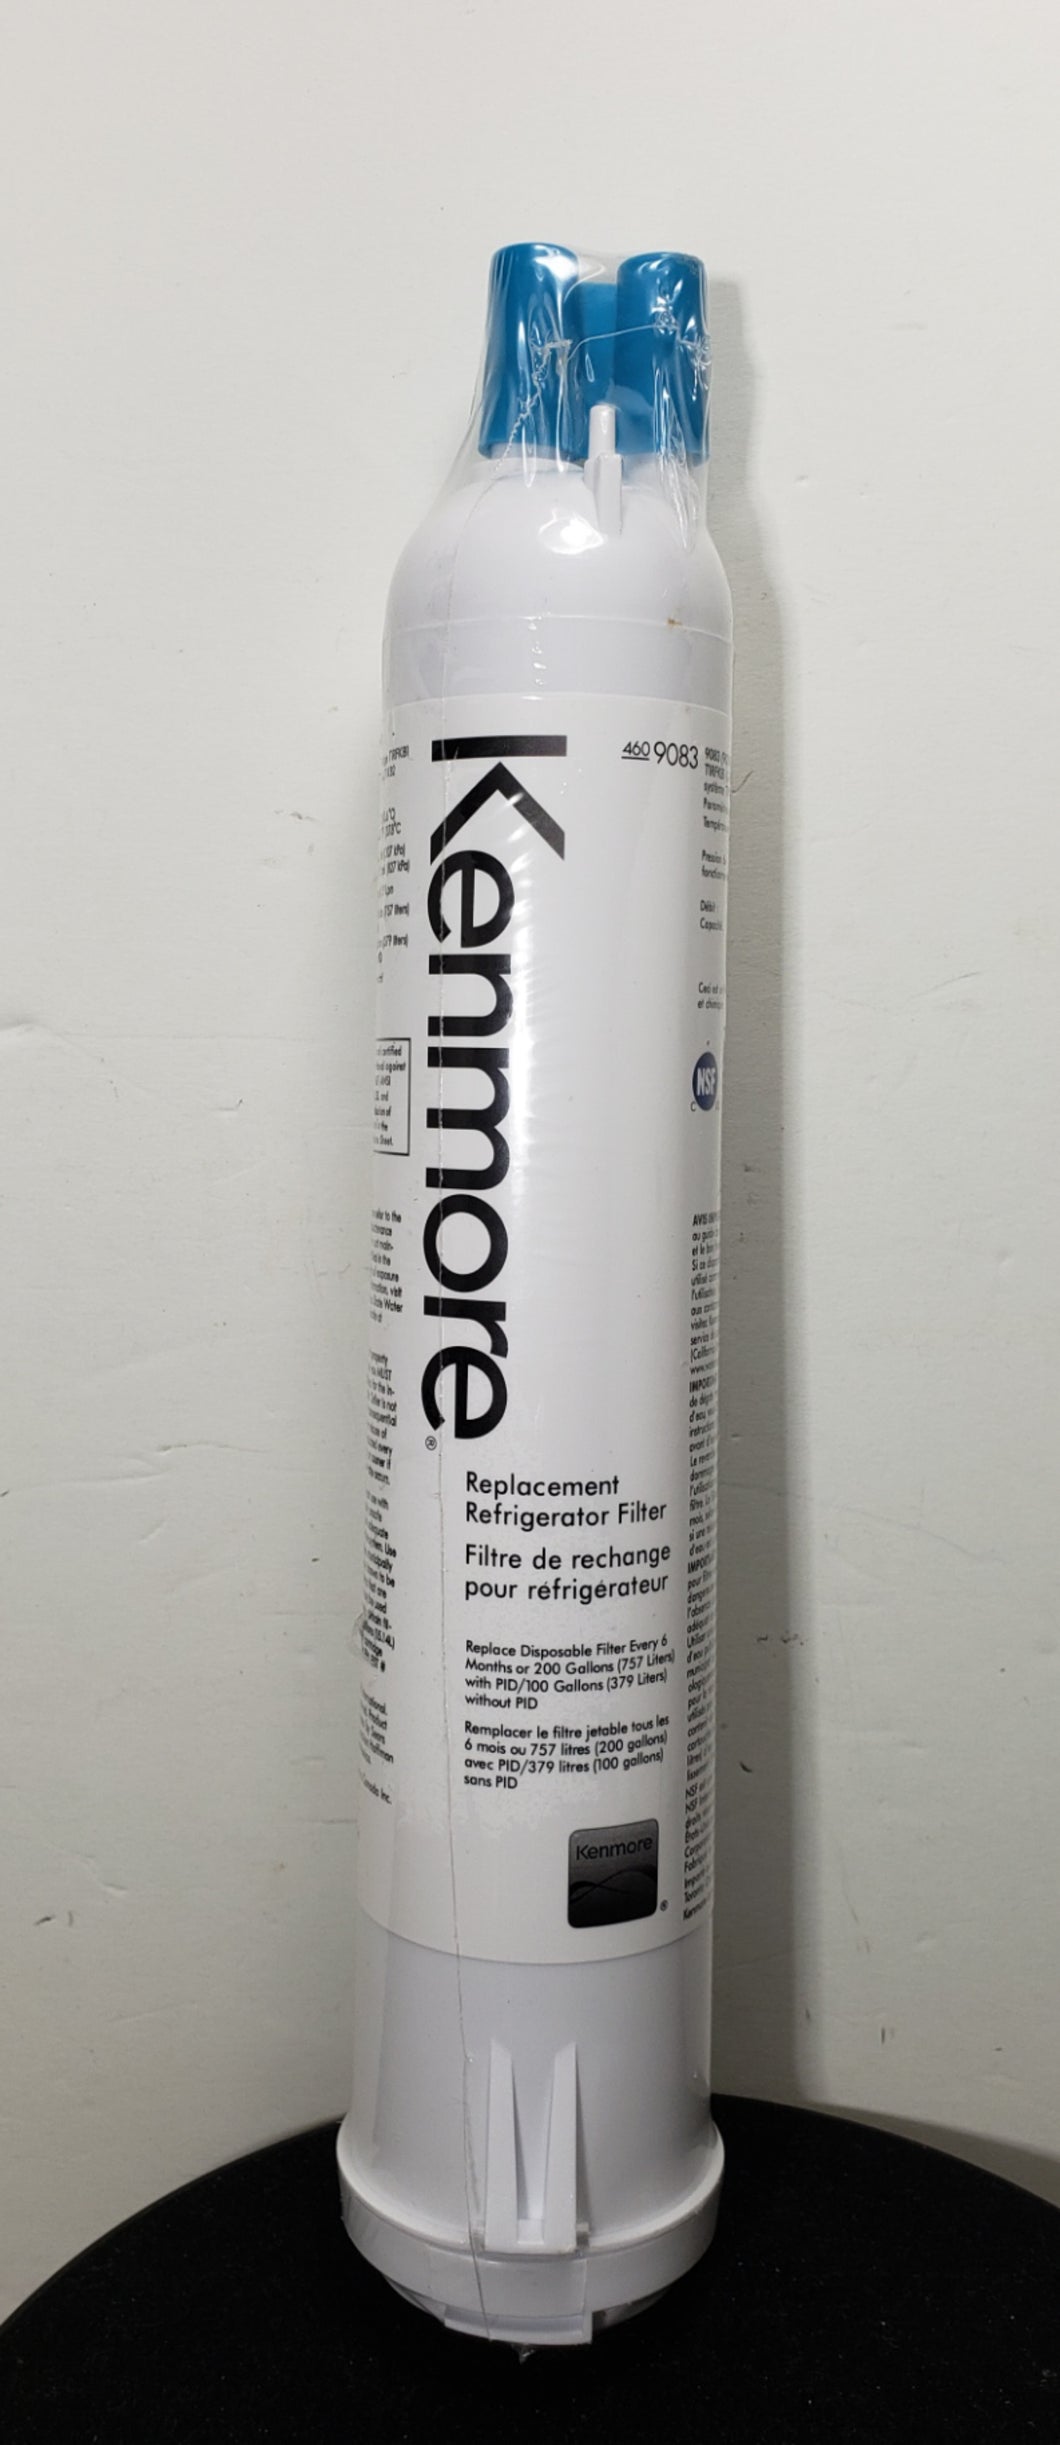 Kenmore 460-9083 Water Filter Replacement Refrigerator Filter